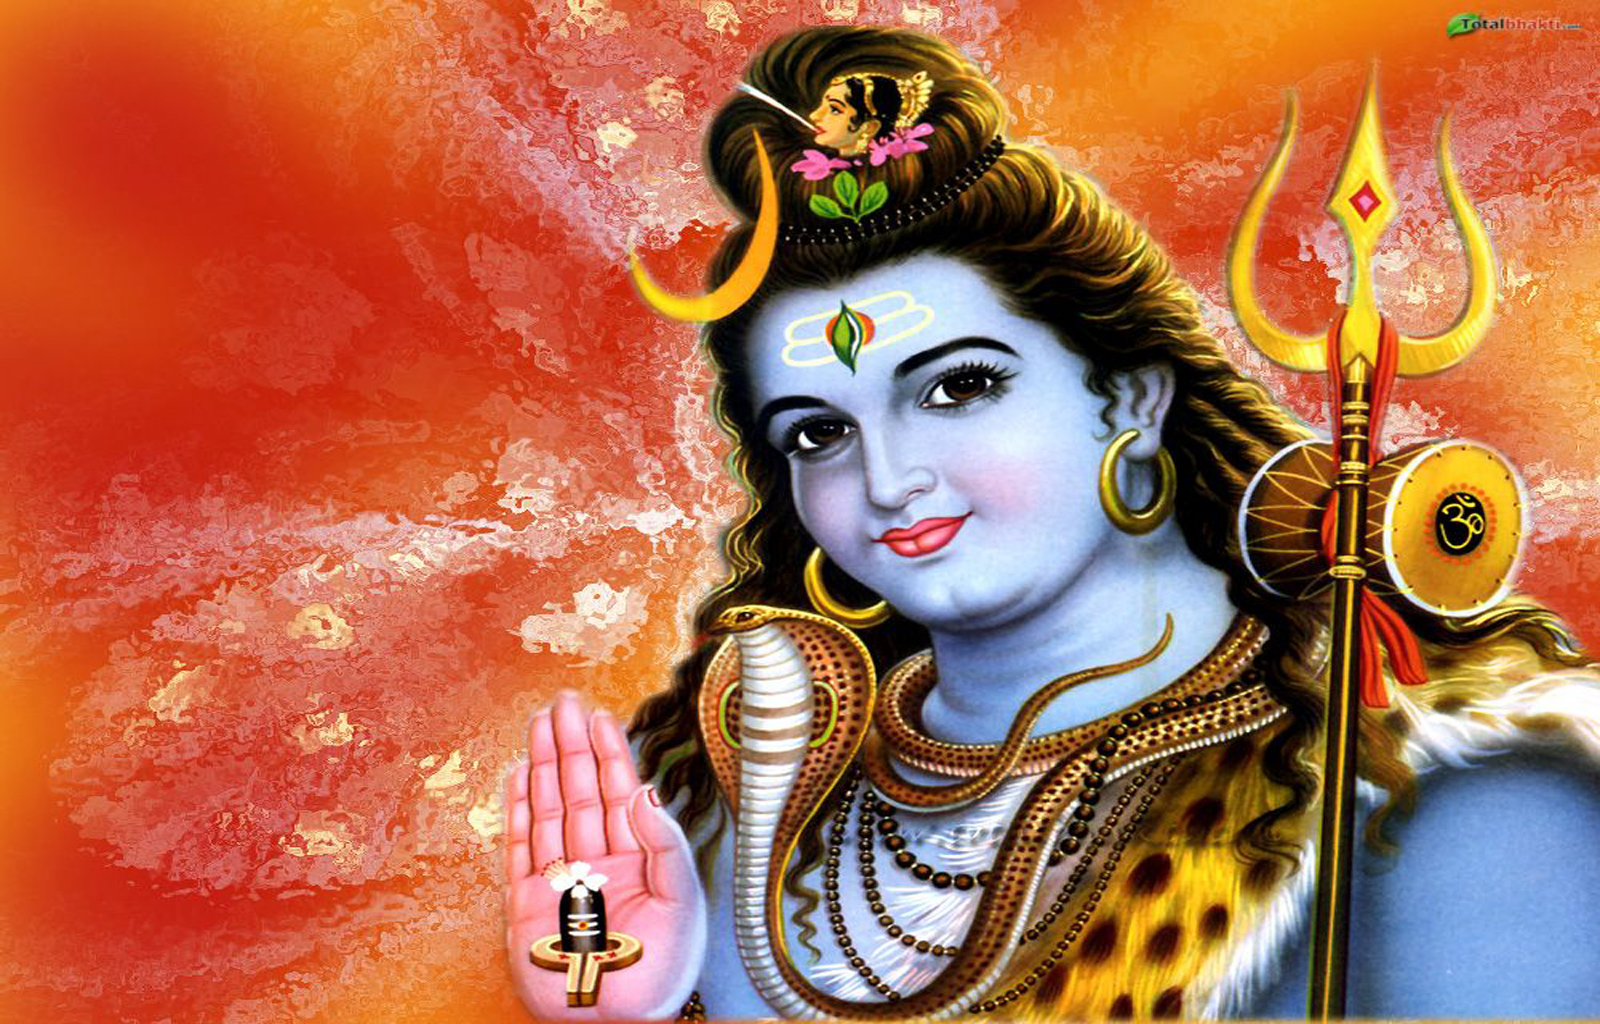 Wallpaper Gallery Lord Shiva